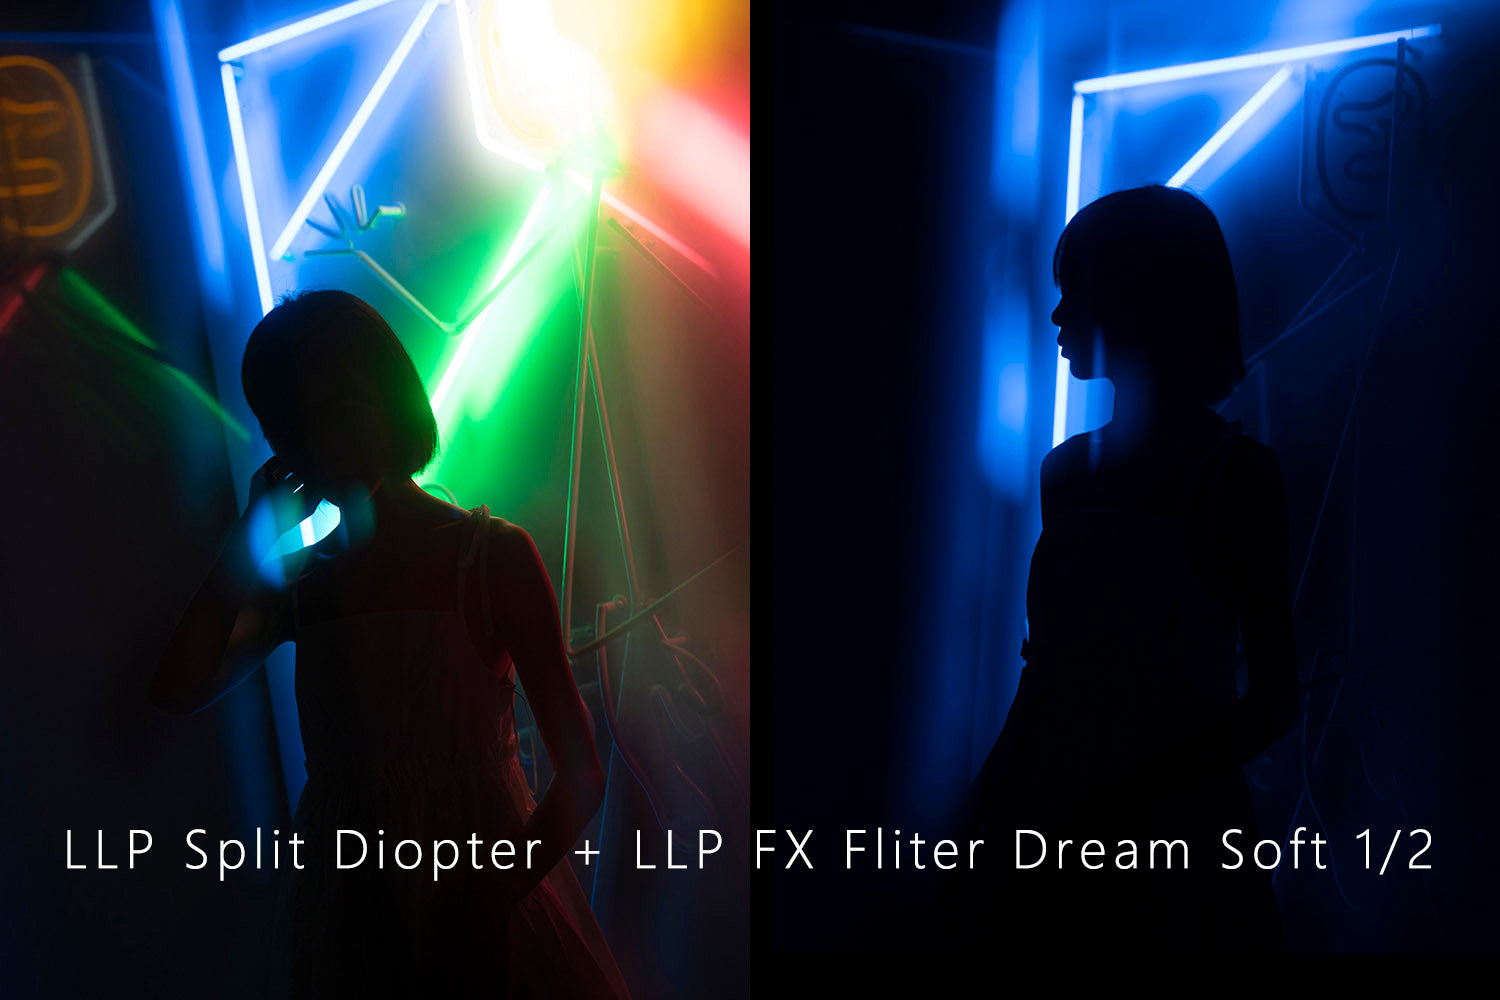 LLP Split Diopter + LLP FX Fliter Dream Soft 1/2